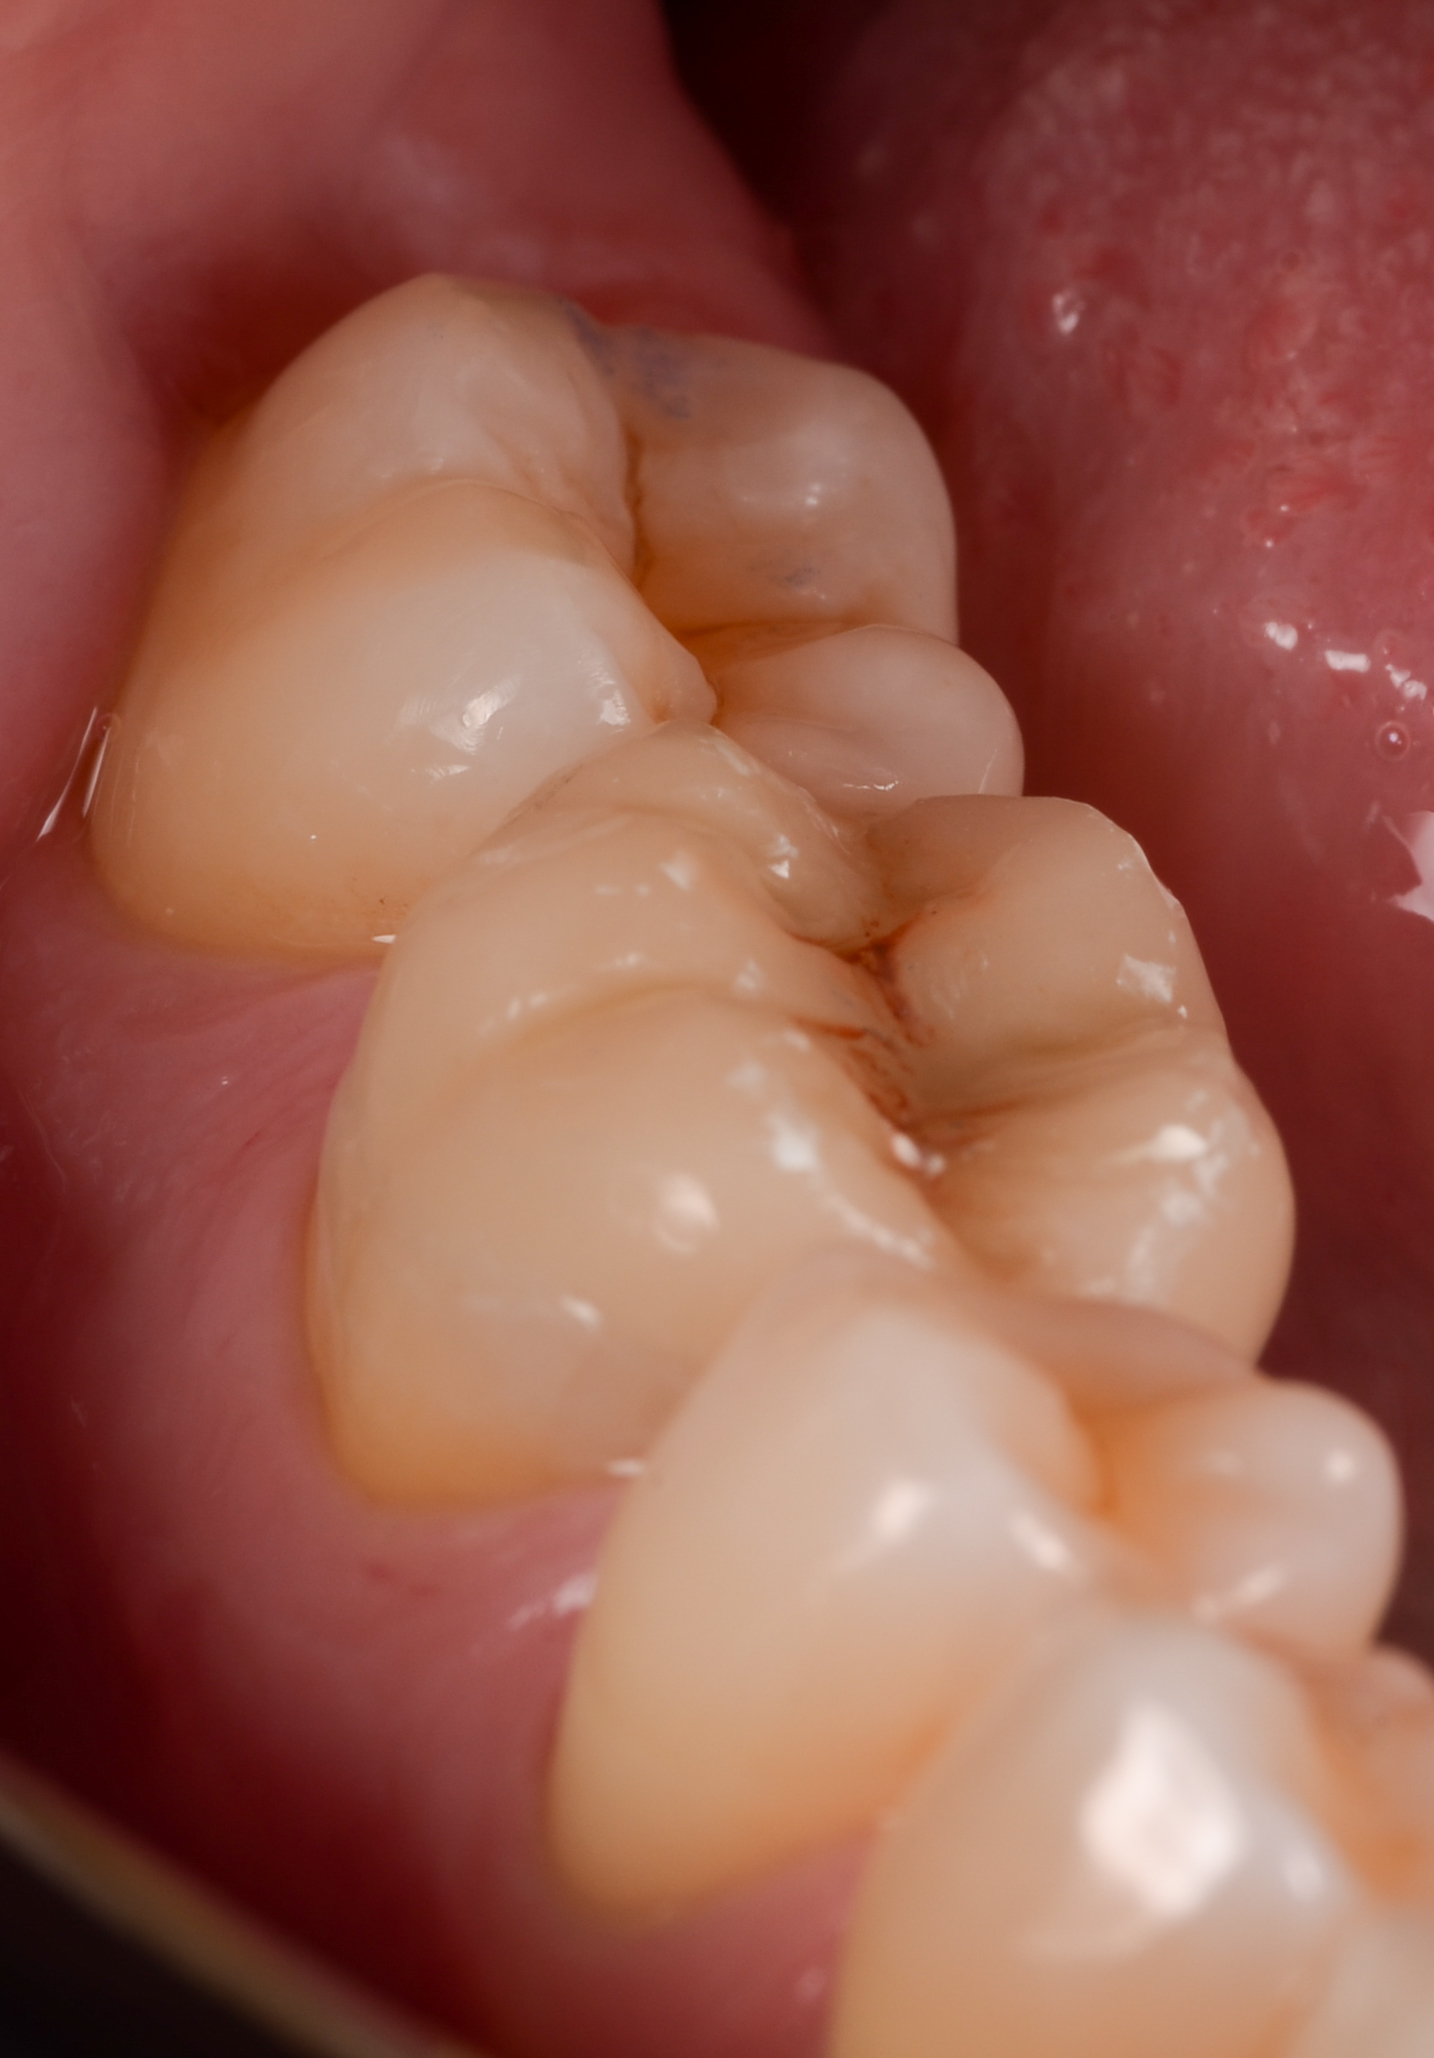 Incrustación (overlay) de cerámica infiltrada con polímeros (vita enamic)  en molar inferior derecho